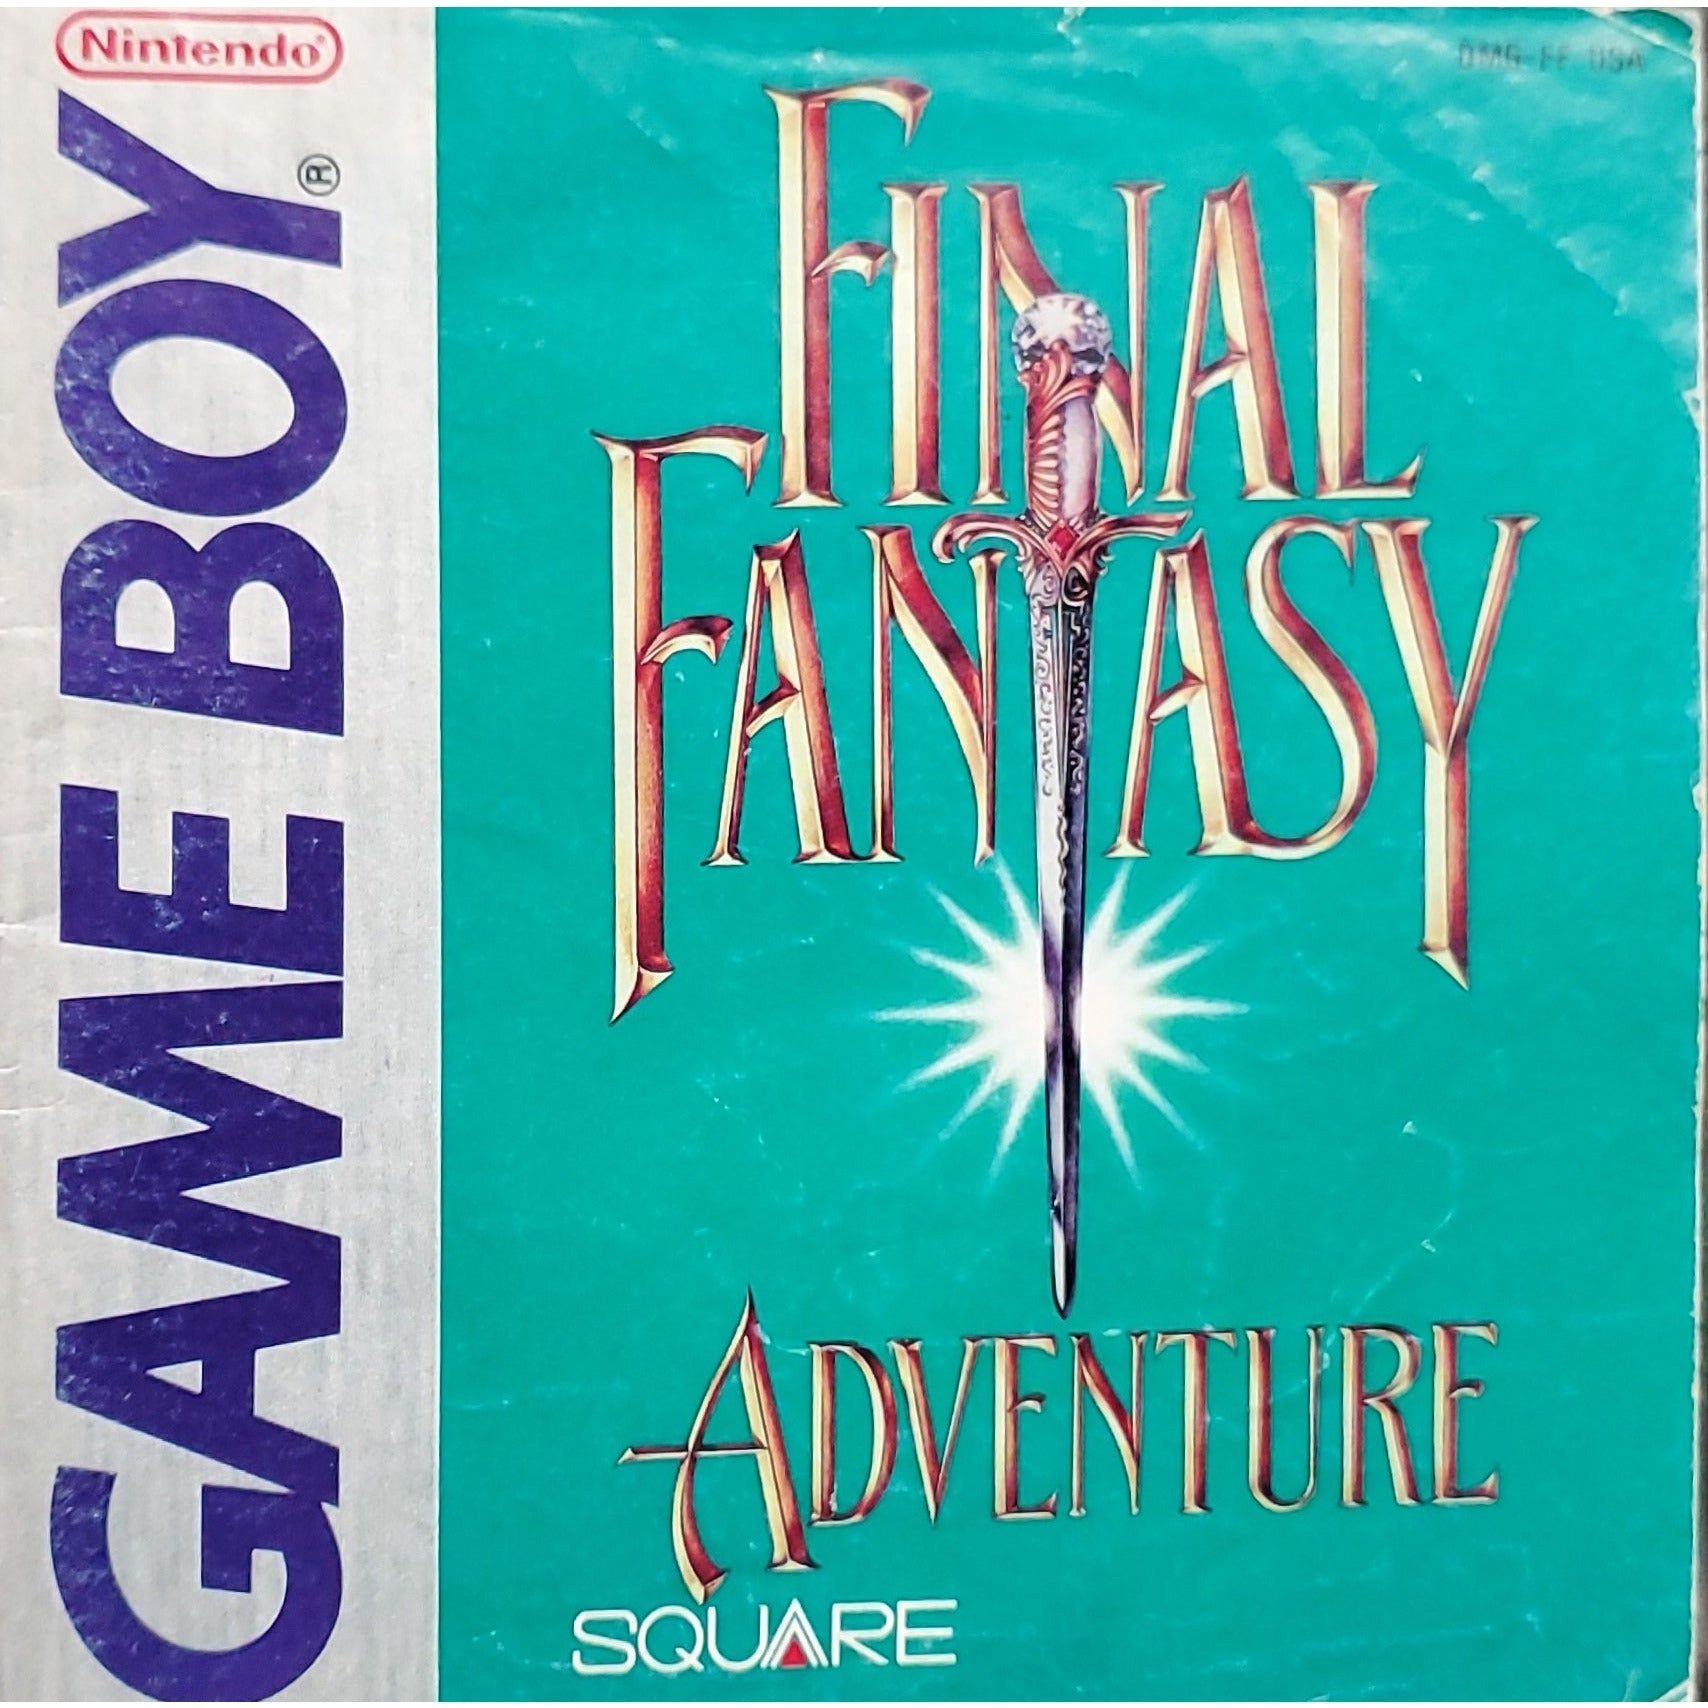 GB - Final Fantasy Adventure (Manual)